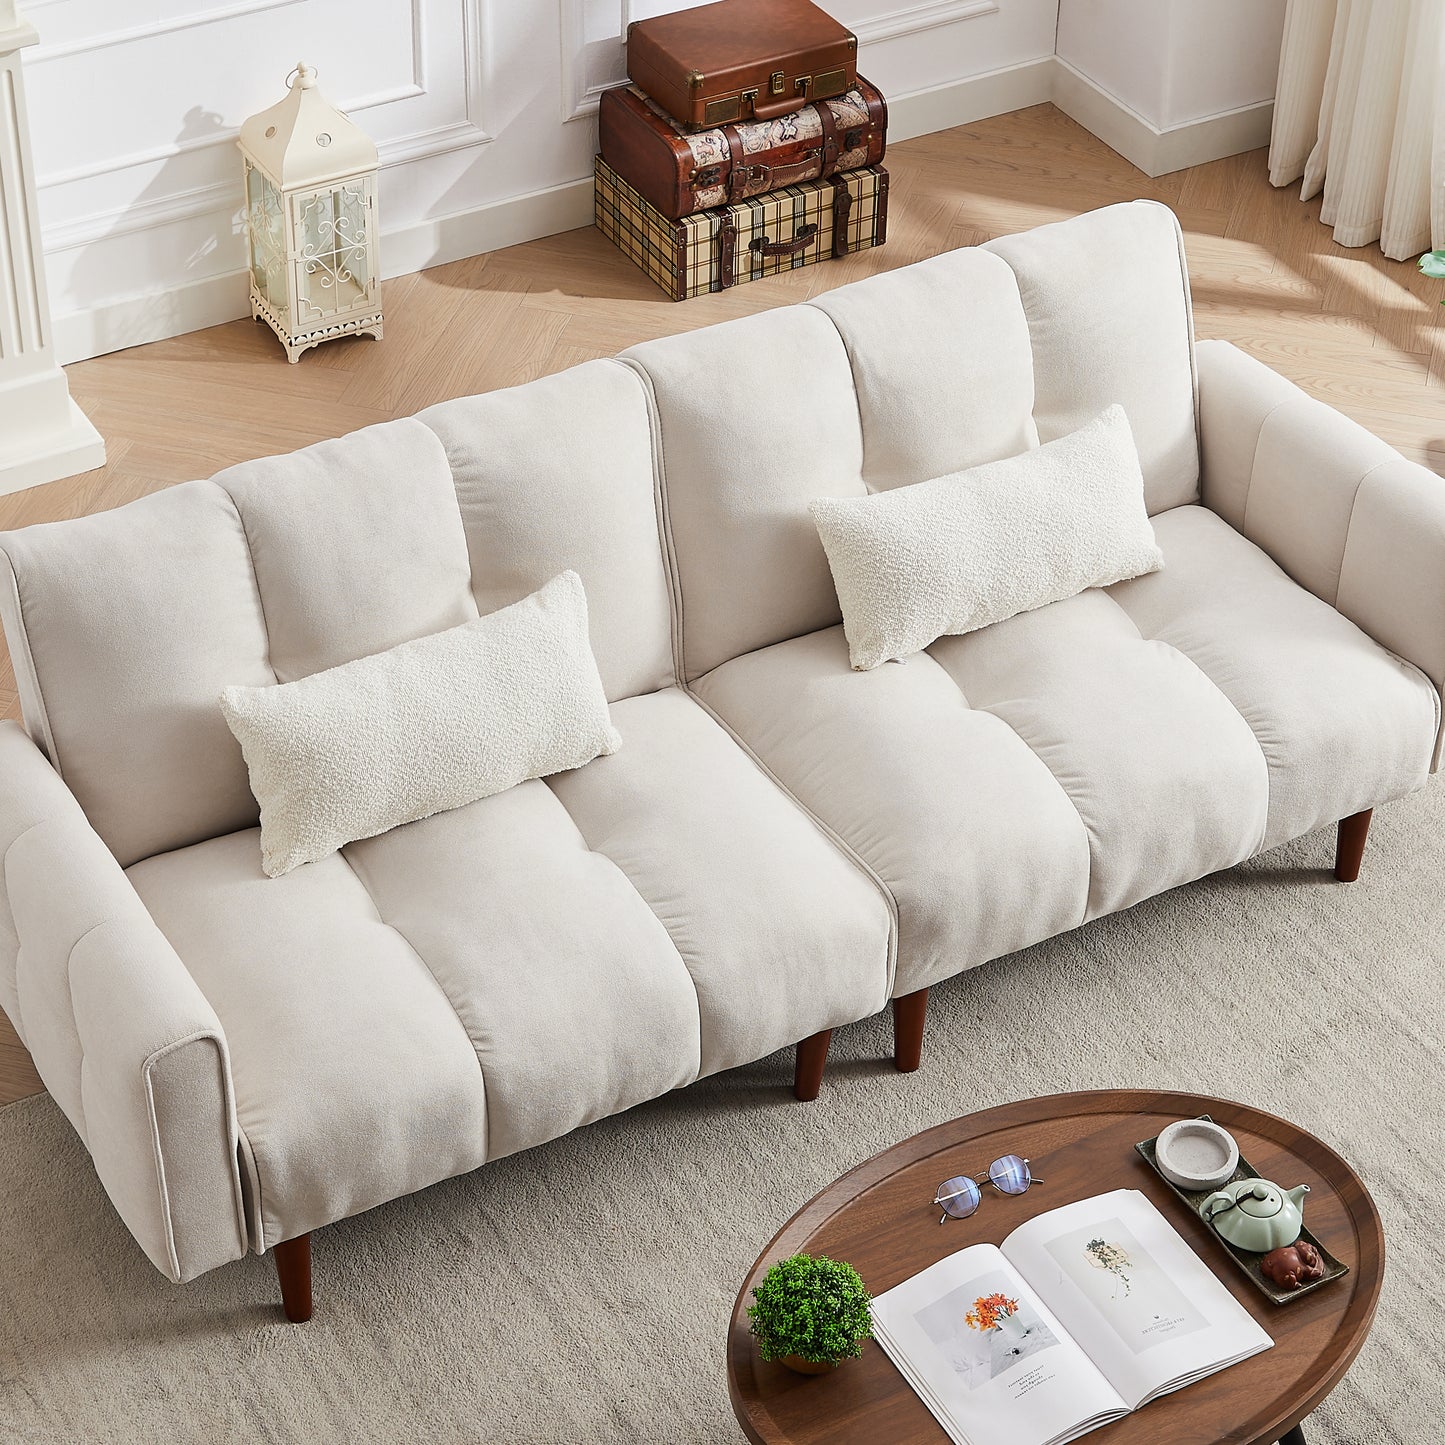 Convertible Futon Sofa Bed, 2 Pillows, Ivory